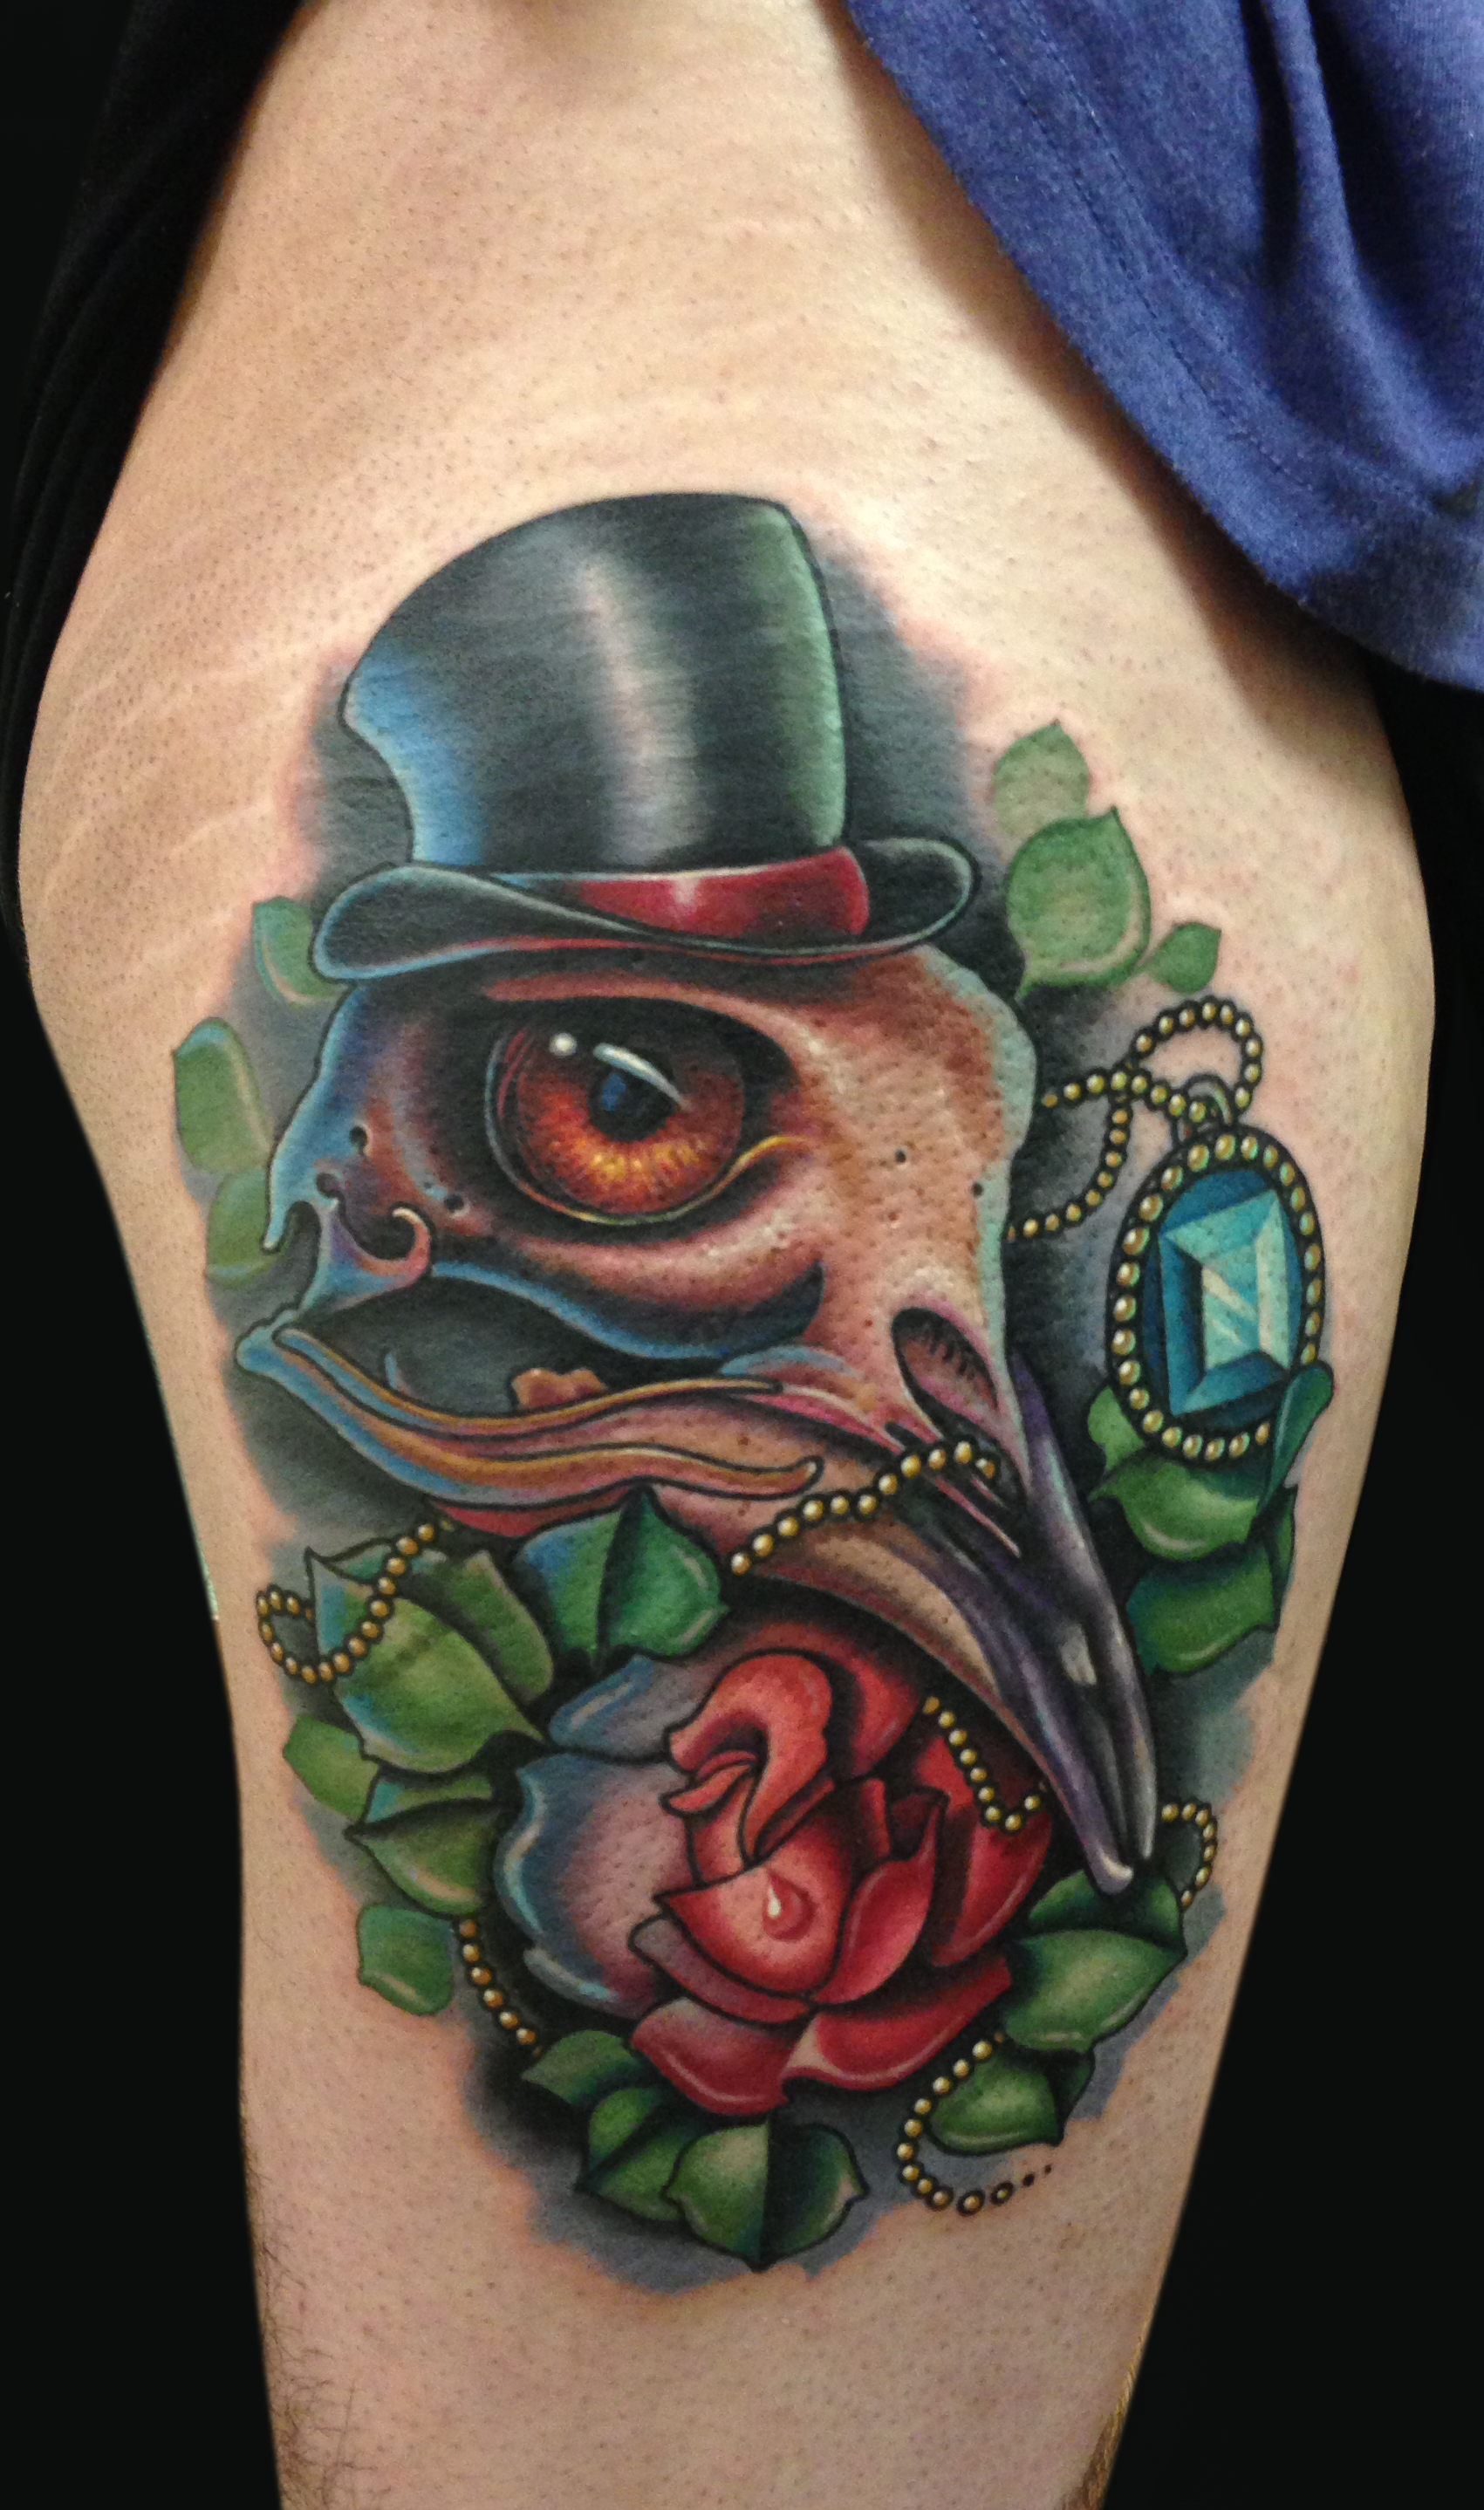 Geometric Flowers And Crow Skull Tattoo On Forearm by Melissa Fusco